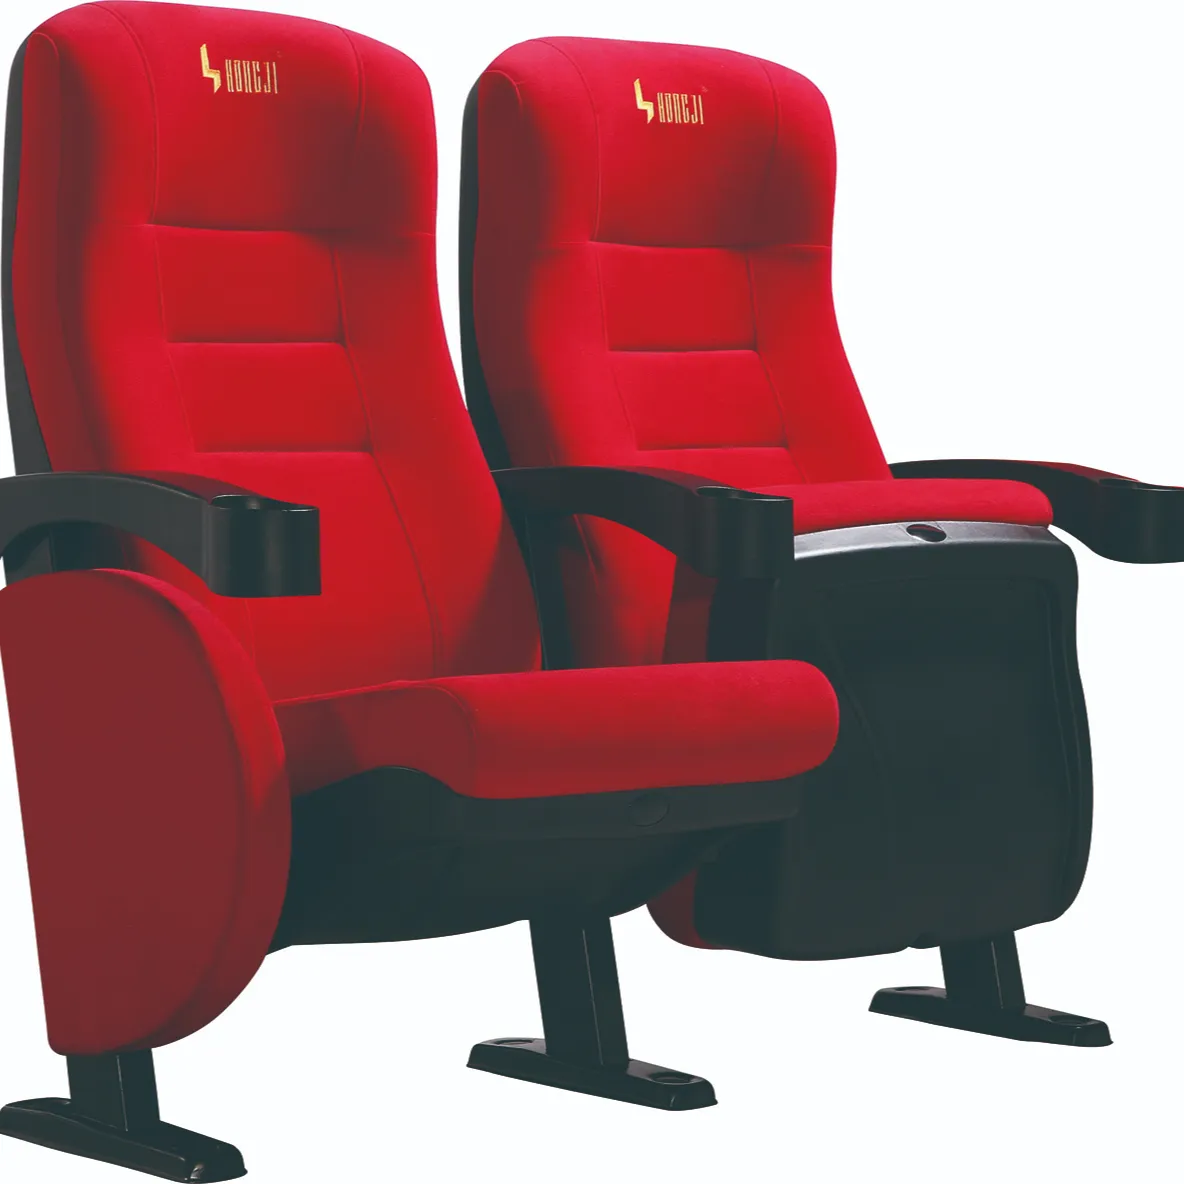 Cinema Chairs Suppliers Theatre Seat Design Theatre Seat Design Movie Theater Seats For Sale